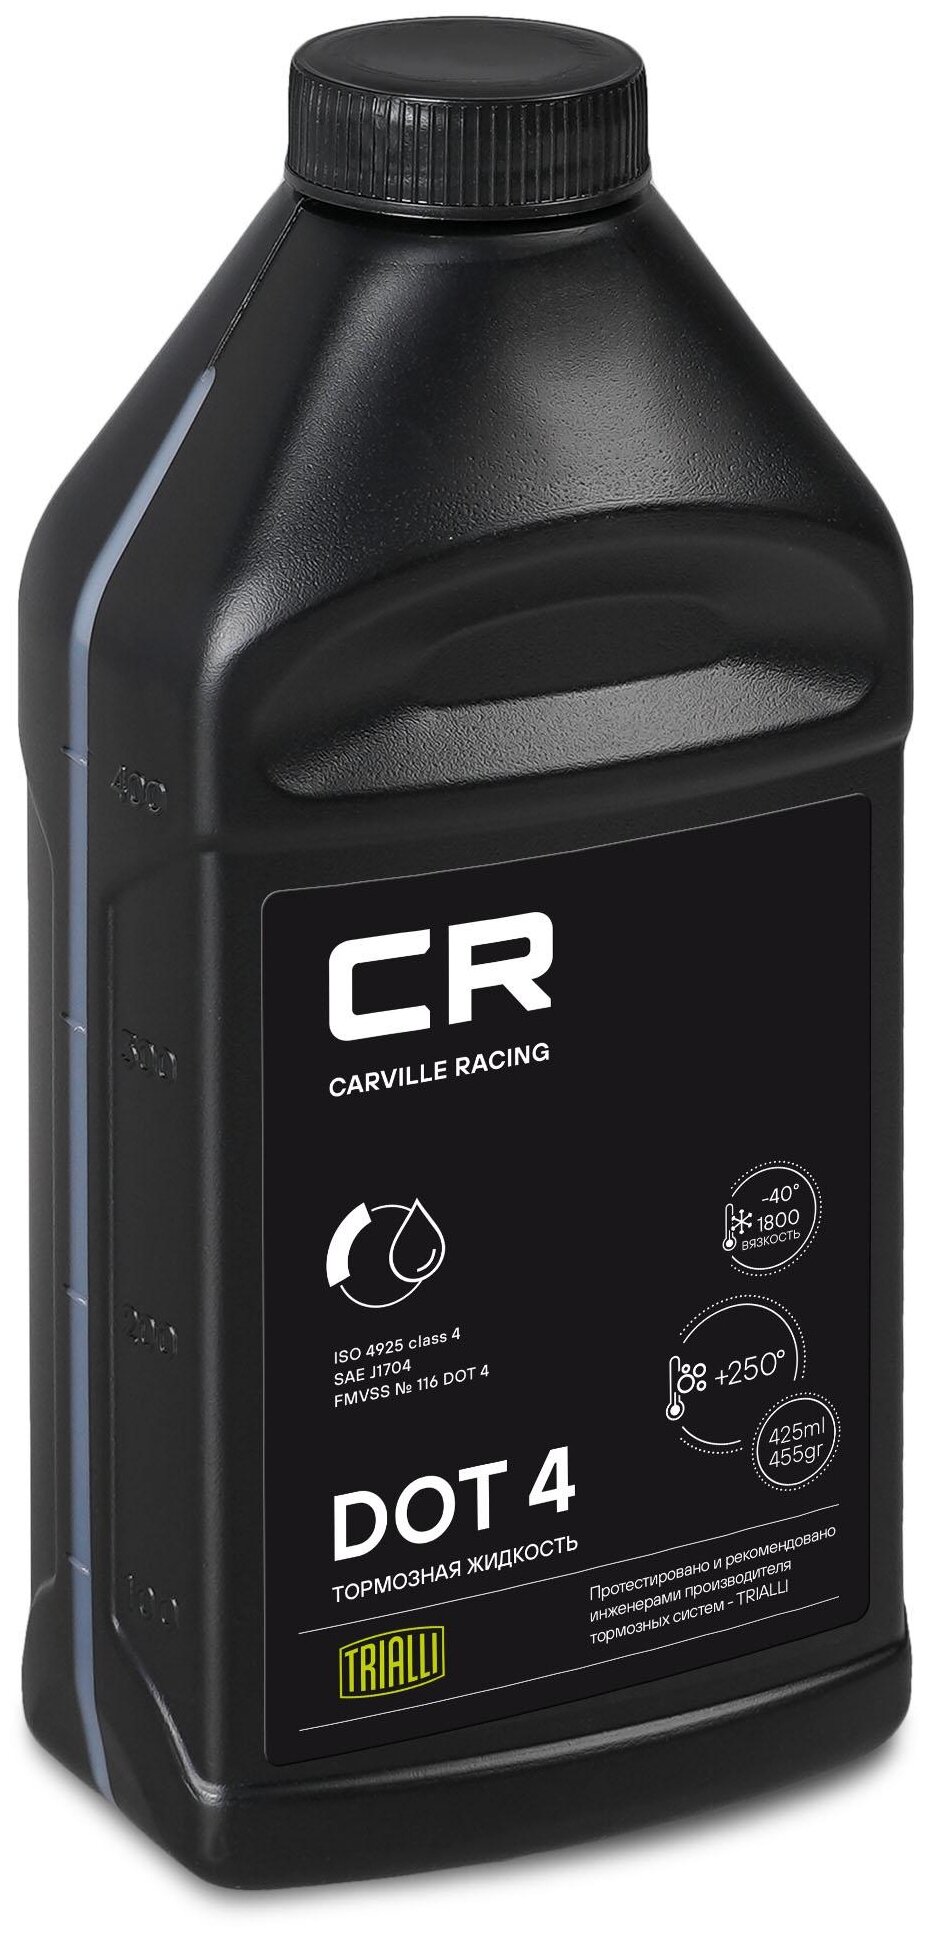 Carville racing тормозная жидкость cr dot 4, t> 250c, вязкость< 1500, 425мл/455гр (l4250505) l4250505